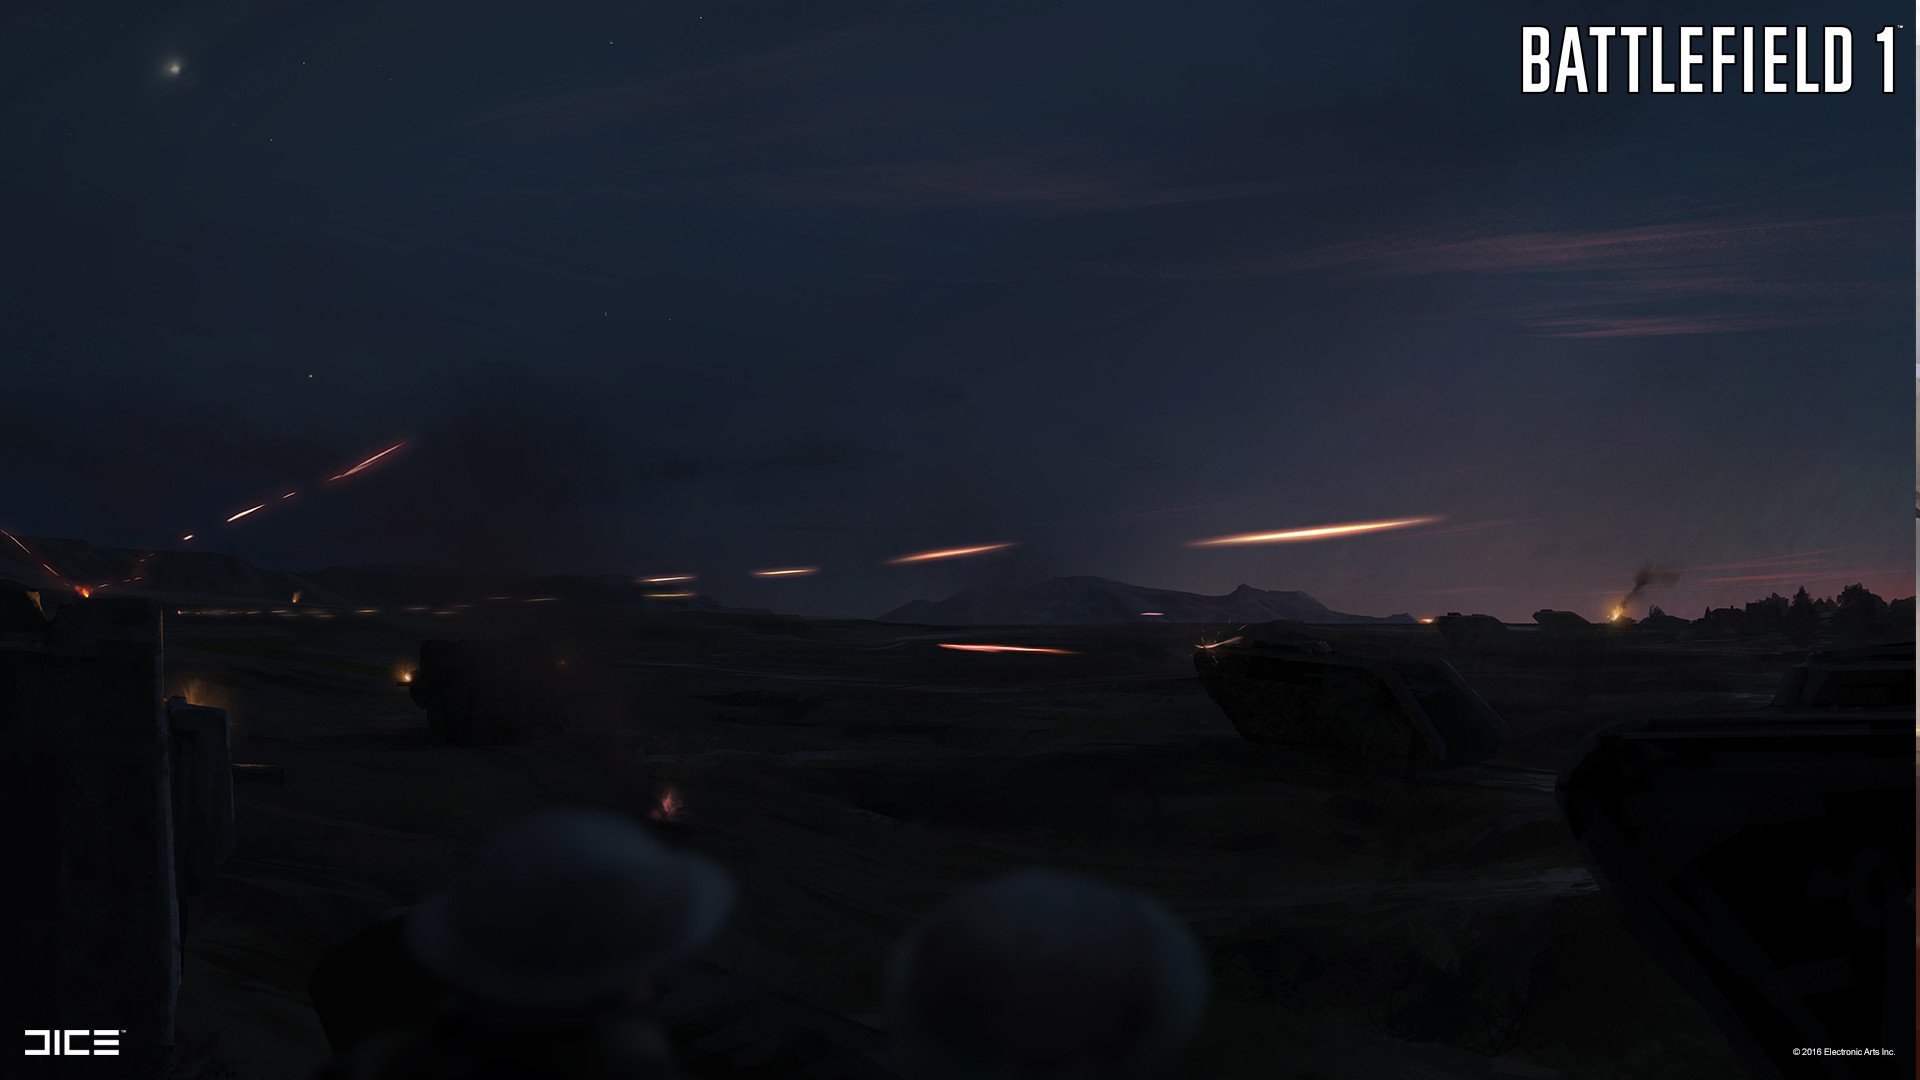 Fine Art: The Art Of Battlefield 1